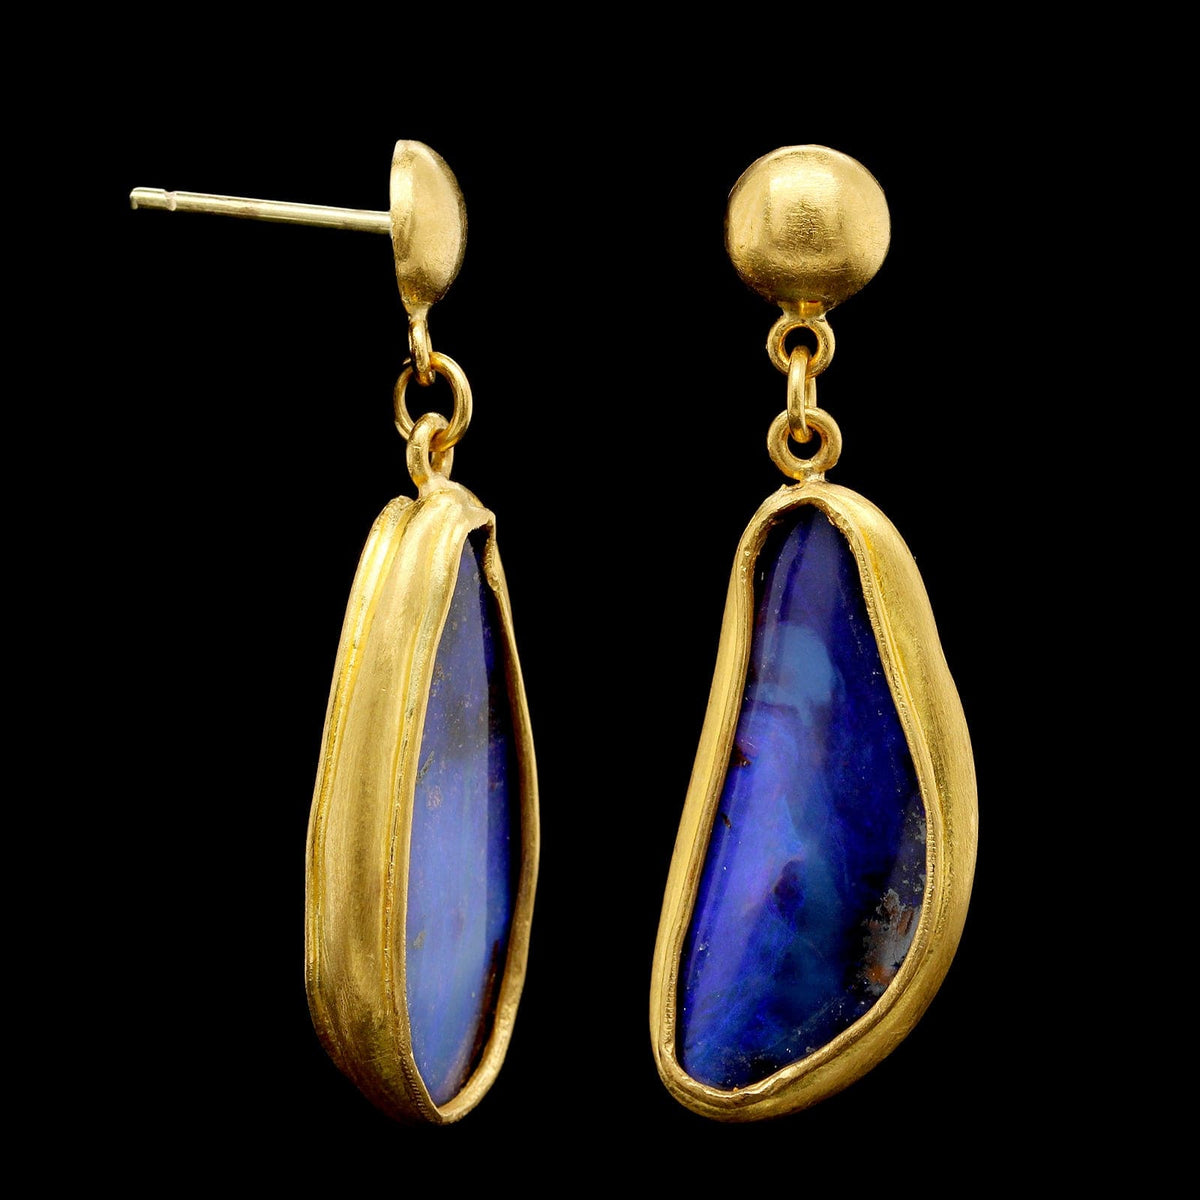 Lika Behar 22K Yellow Gold Estate Boulder Opal Earrings